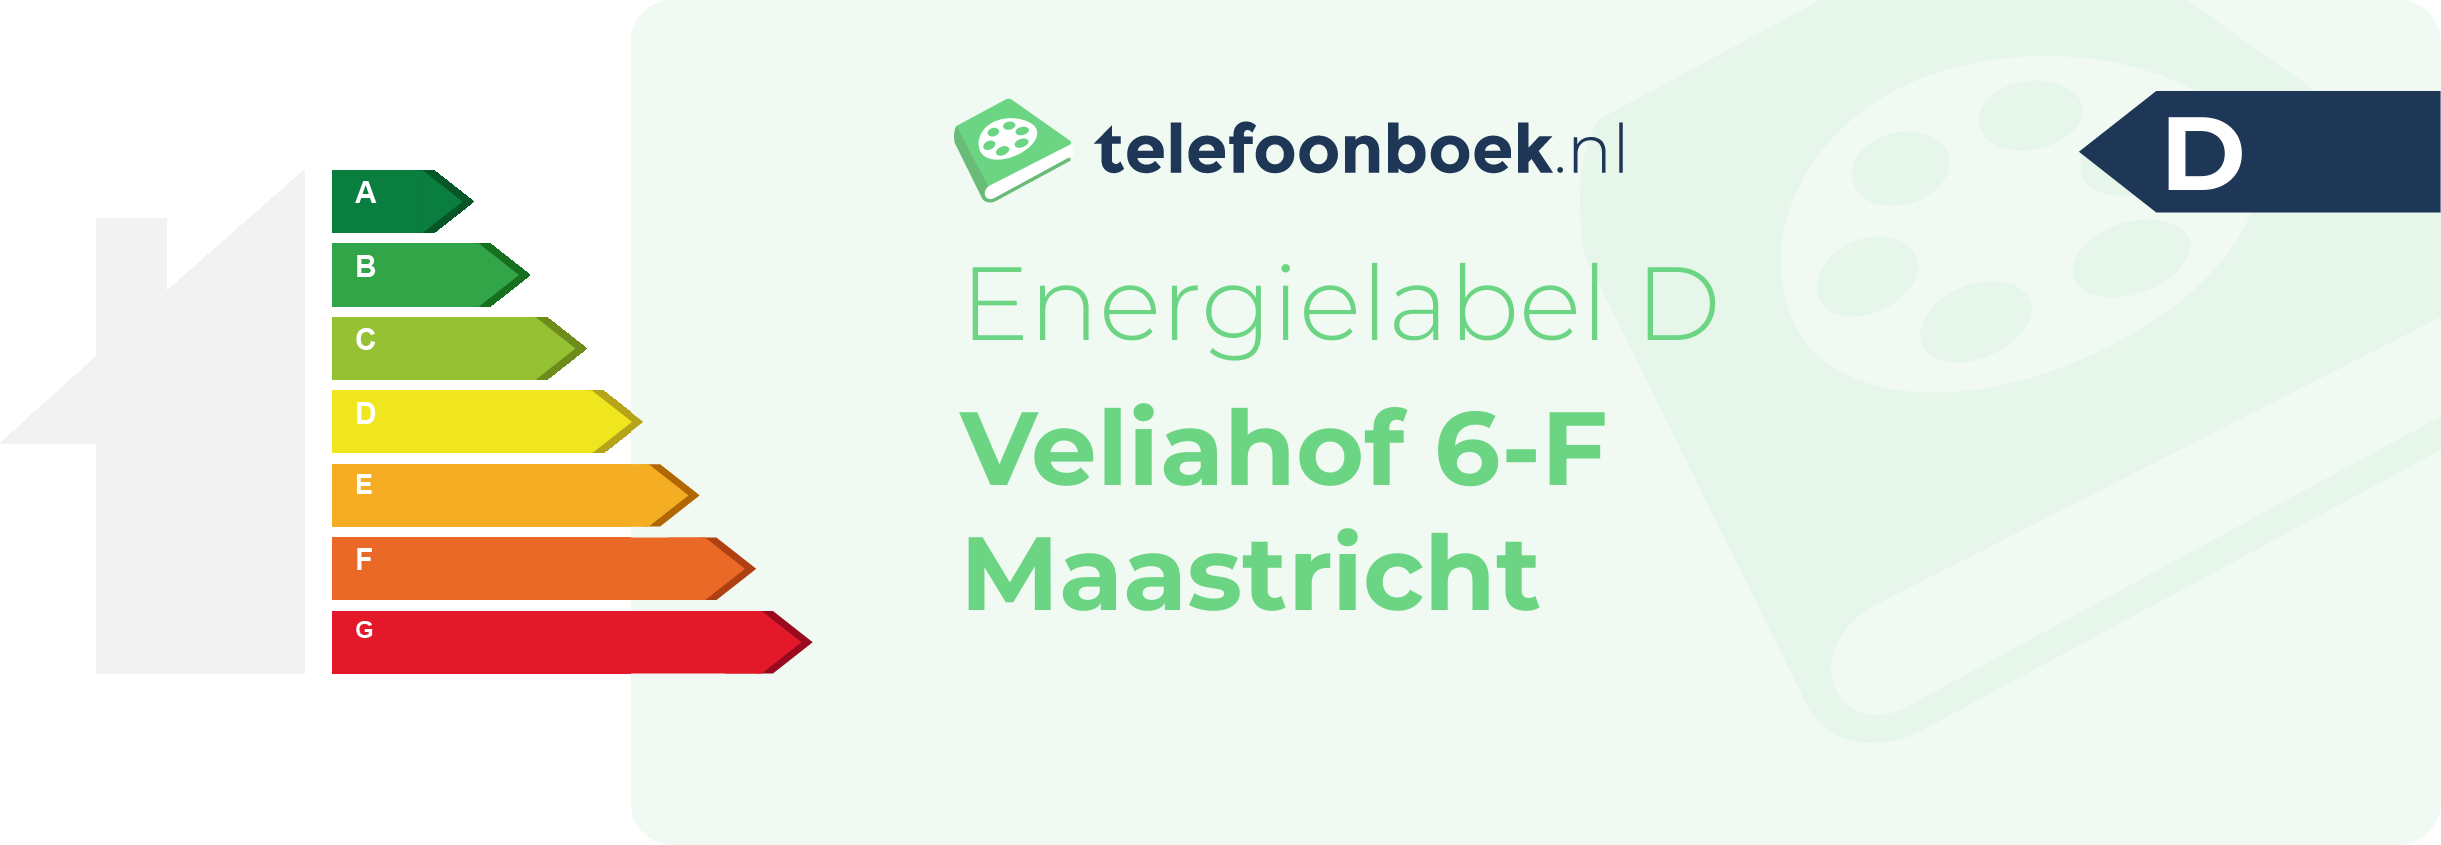 Energielabel Veliahof 6-F Maastricht